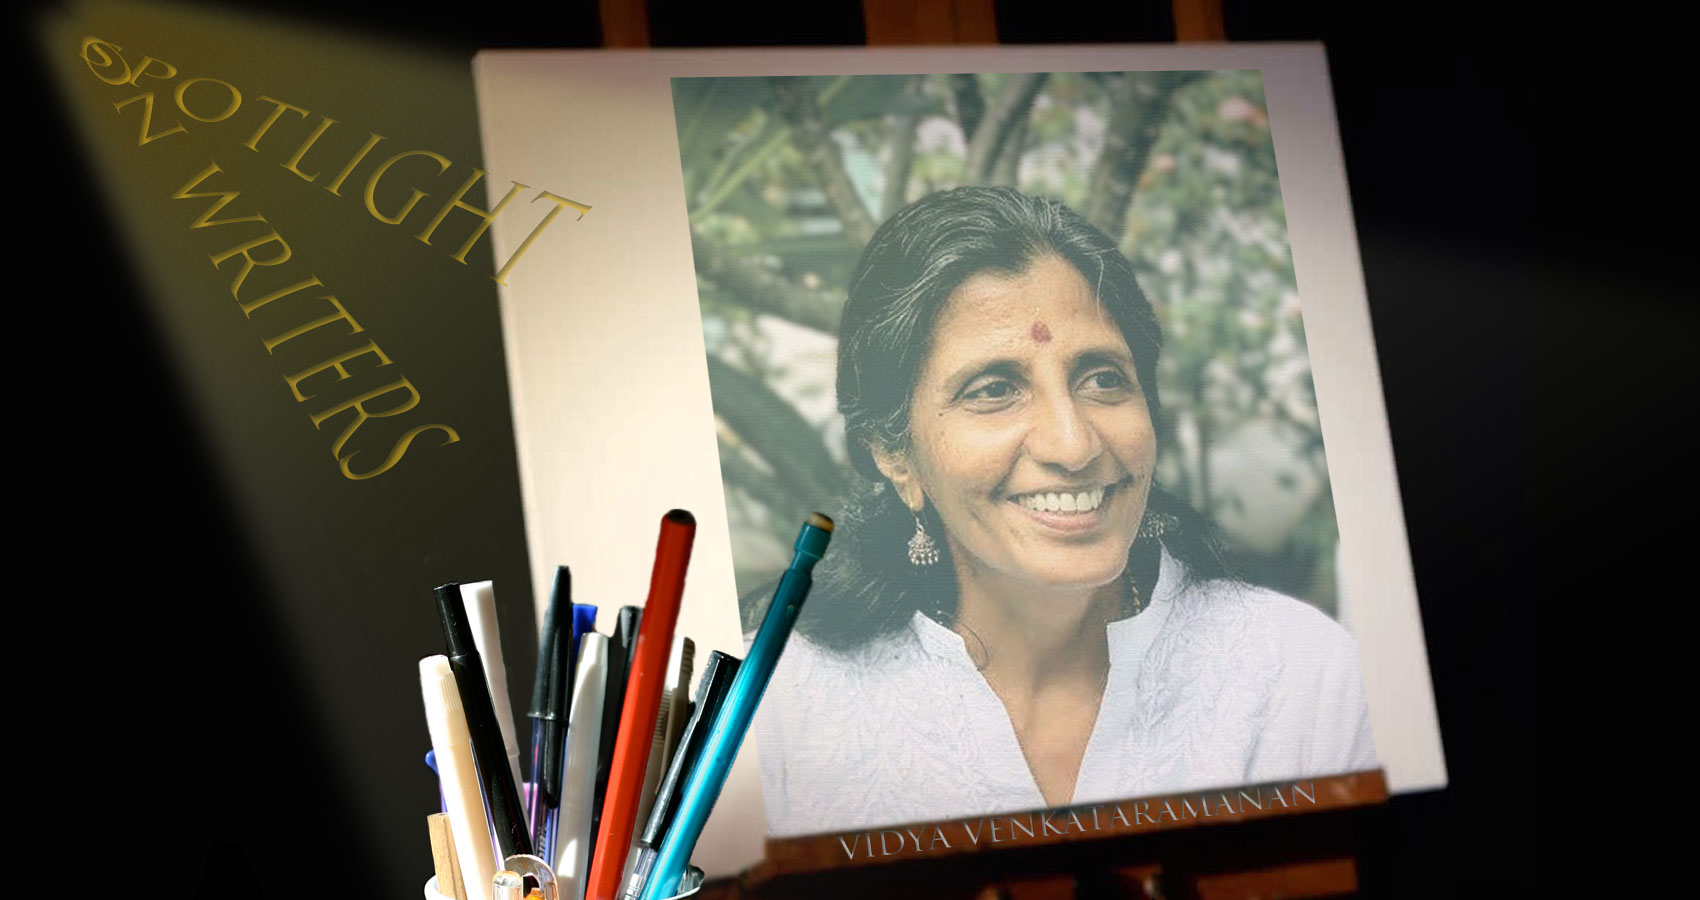 Spotlight On Writers - Vidya Venkataramanan, interview at Spillwords.com